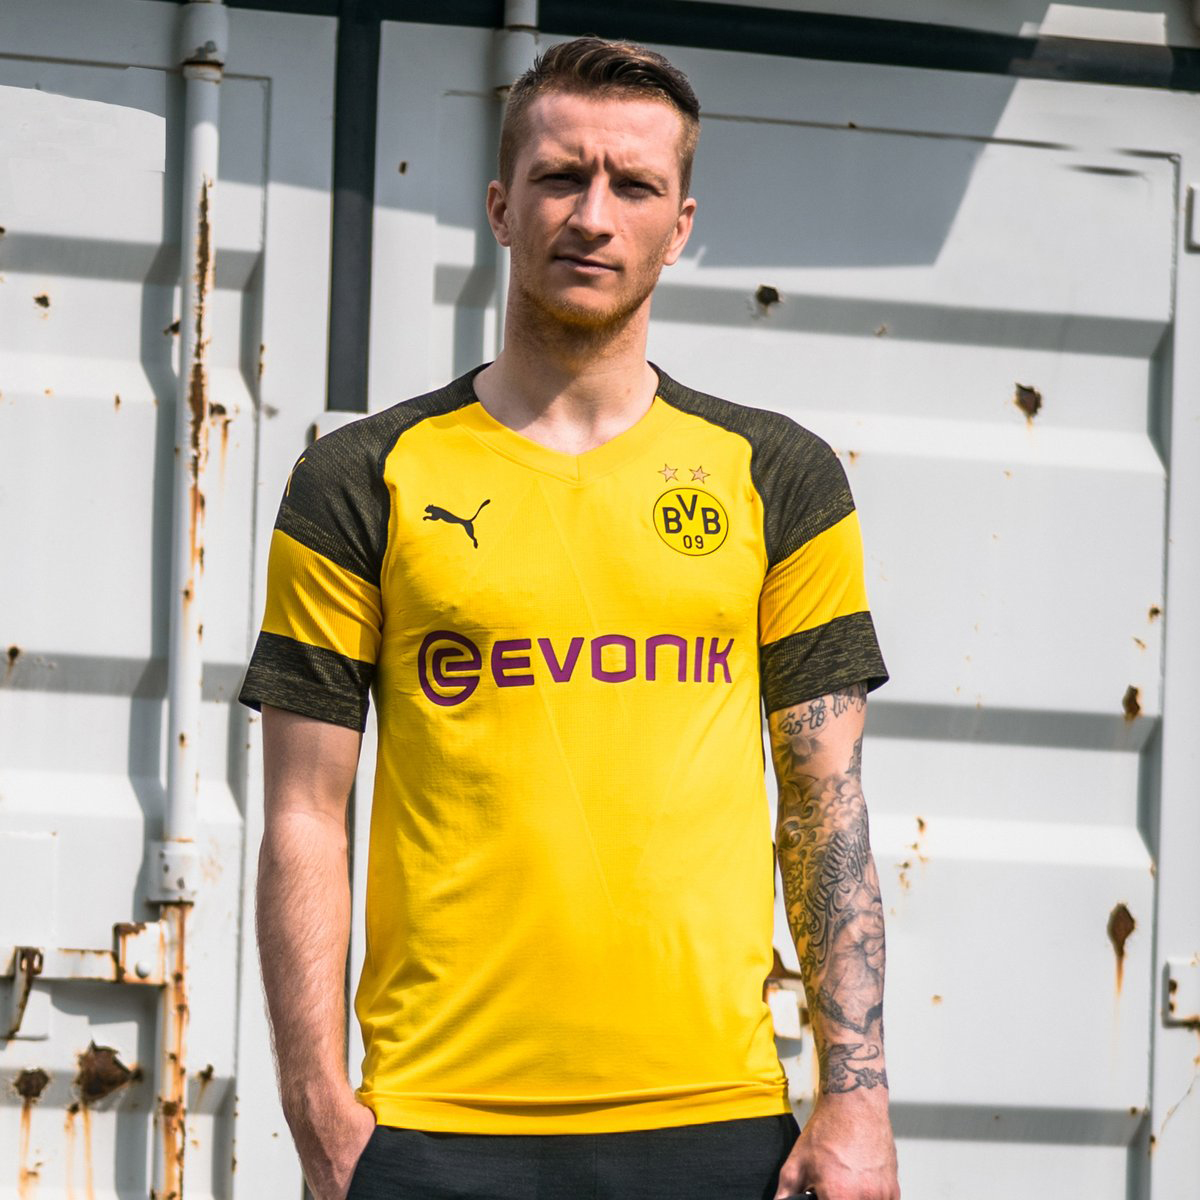 Borussia Dortmund PUMA Home Kit 2018 19